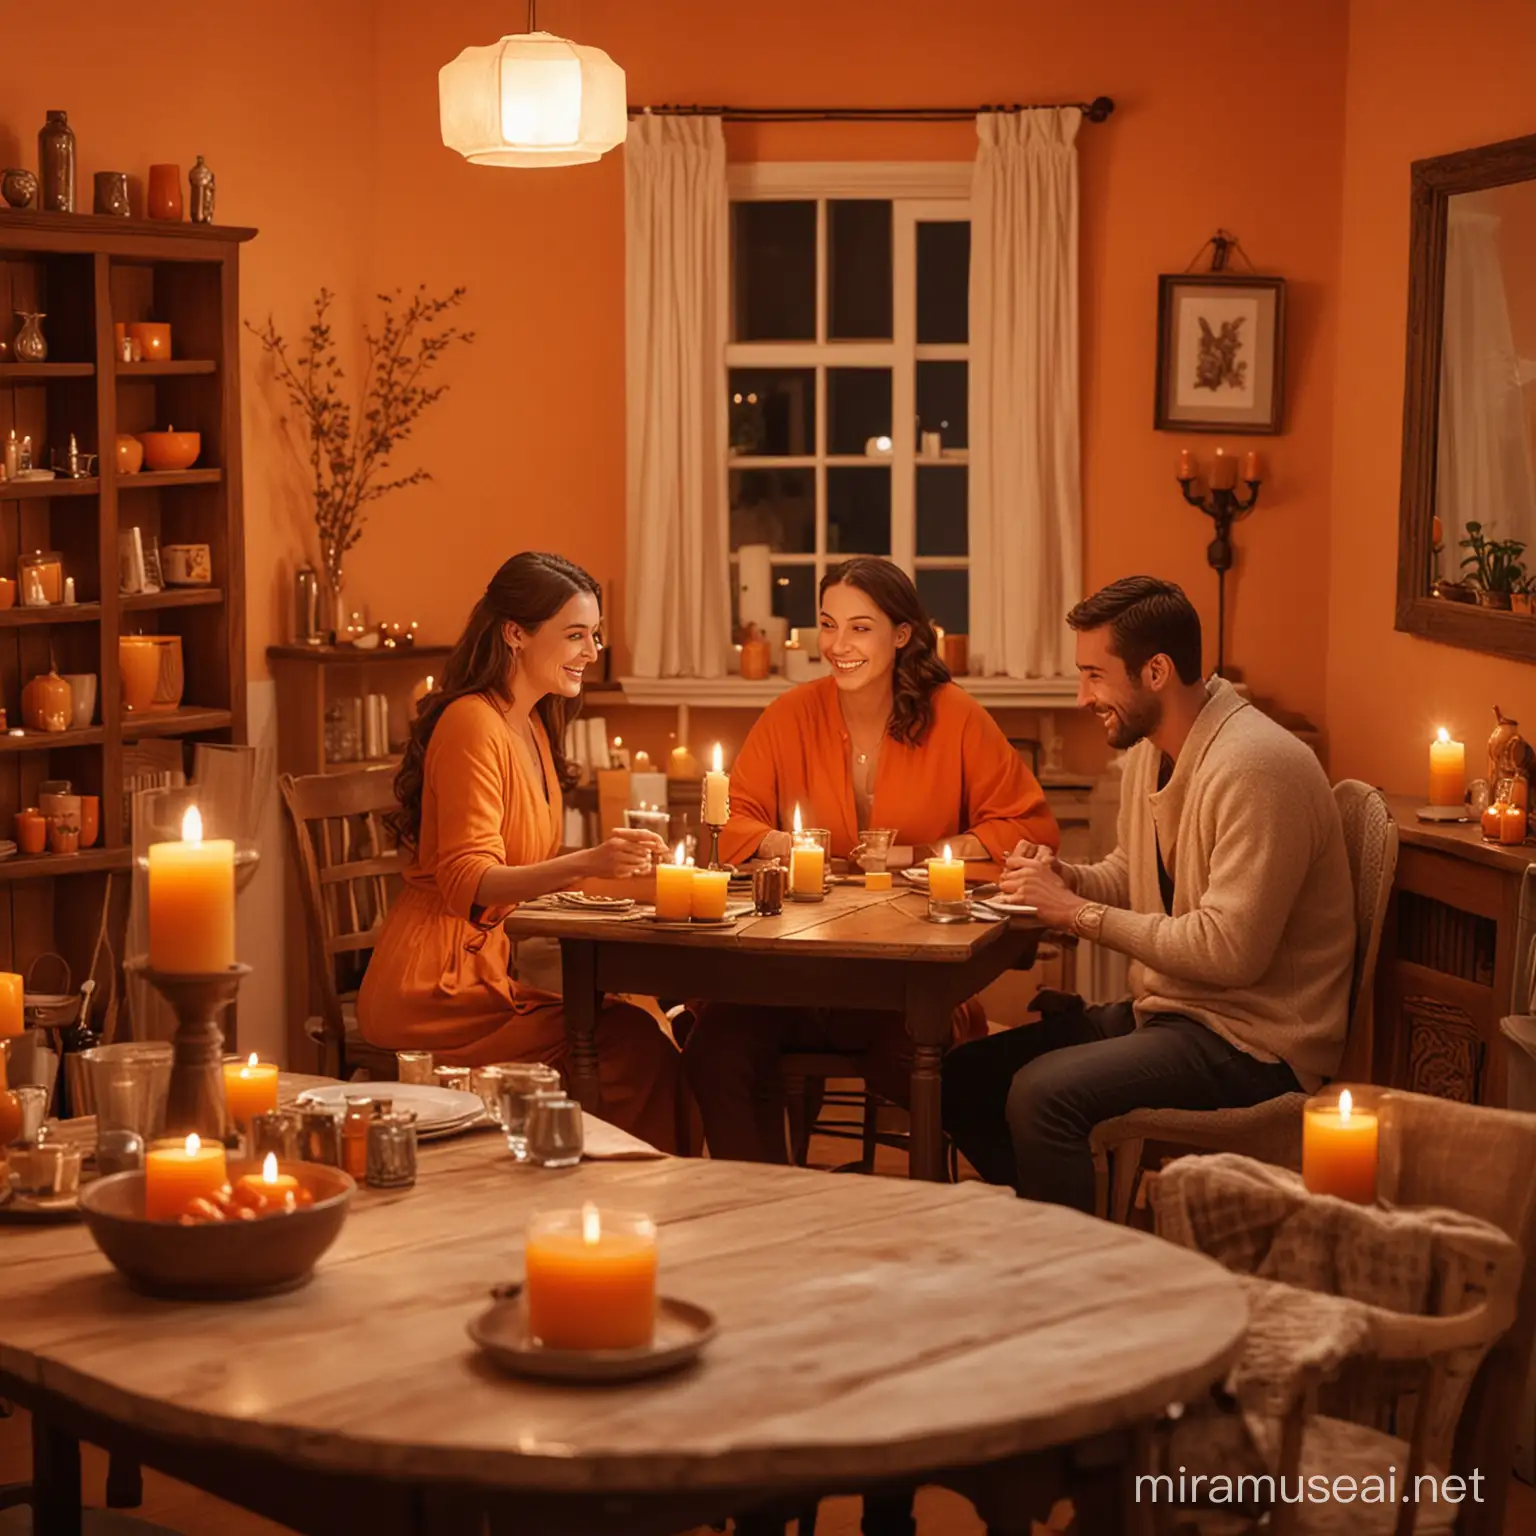 Happy Couple Enjoying Candlelit Dinner in Warm Orange Interior